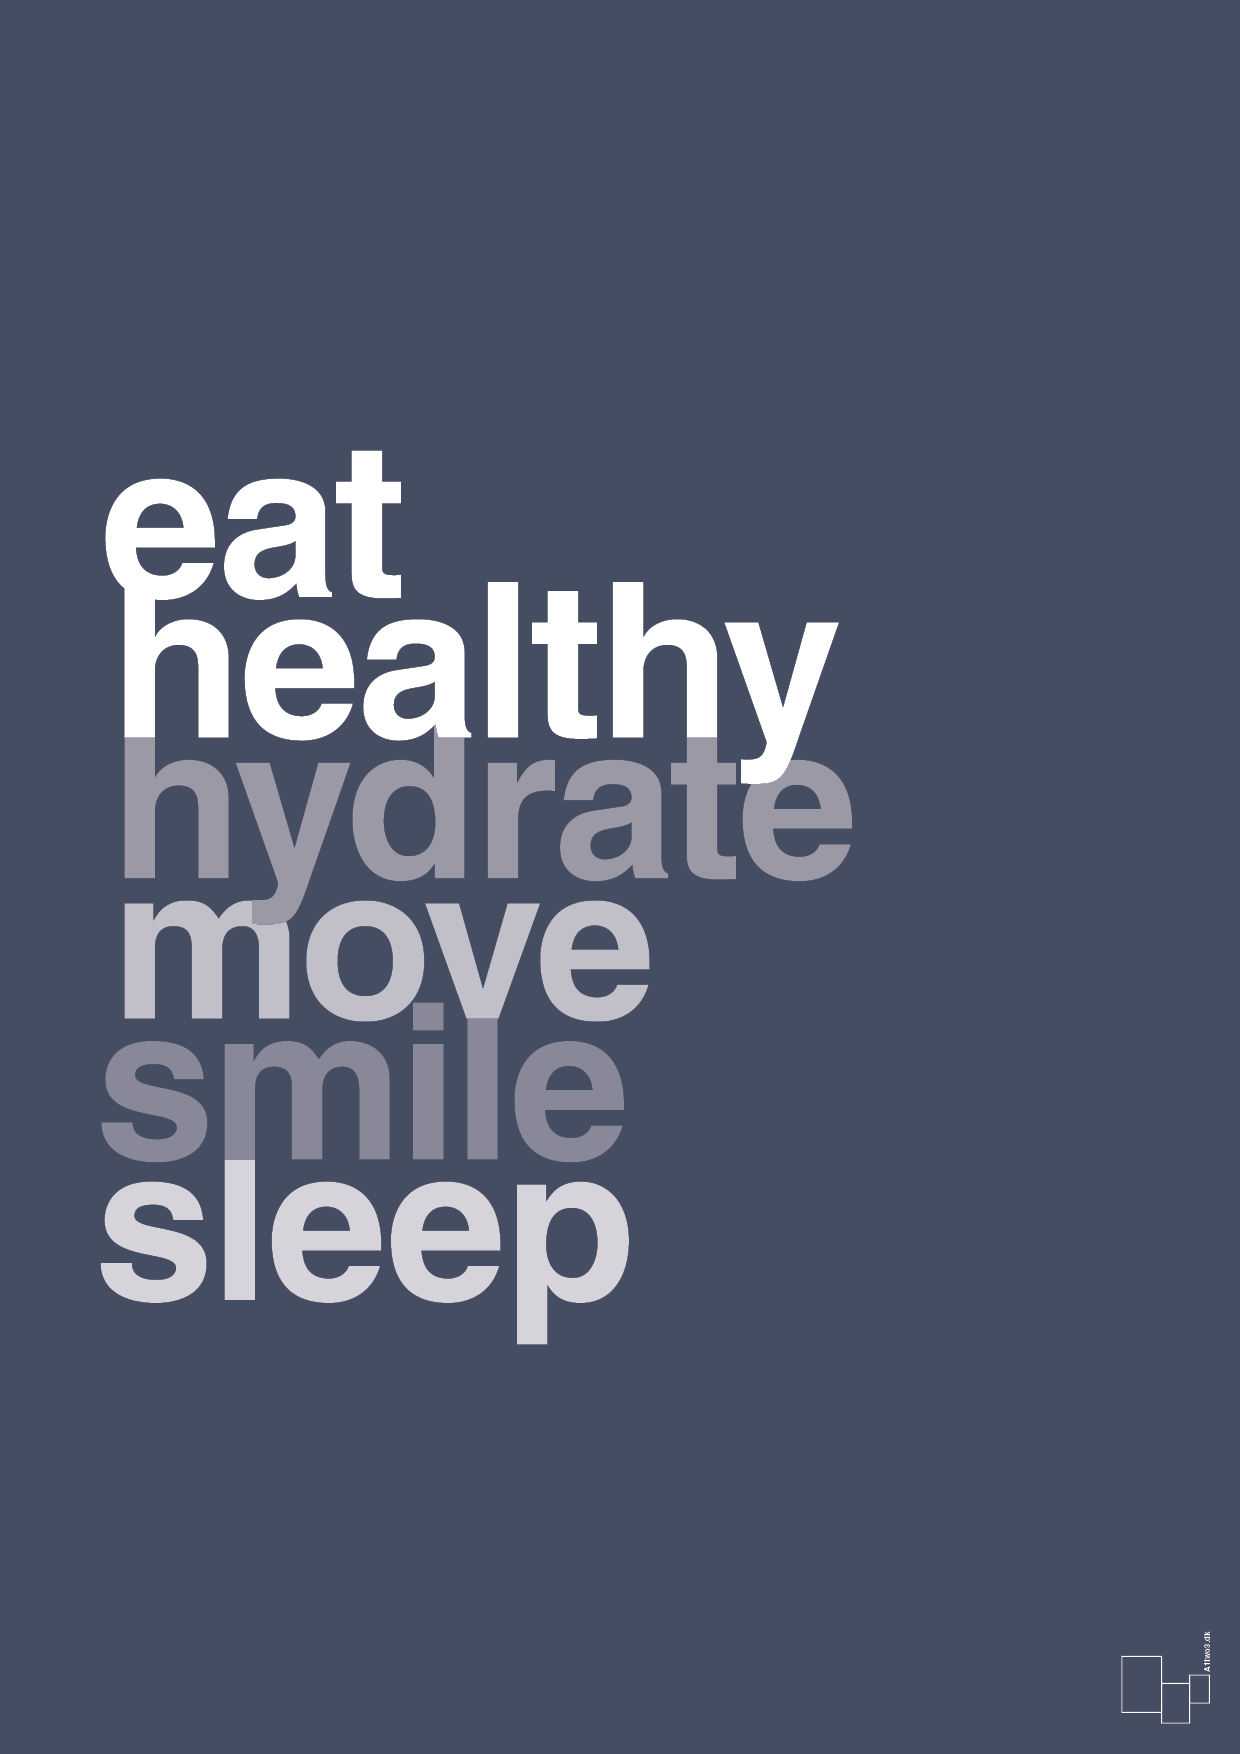 eat healthy hydrate move smile sleep - Plakat med Ordsprog i Petrol